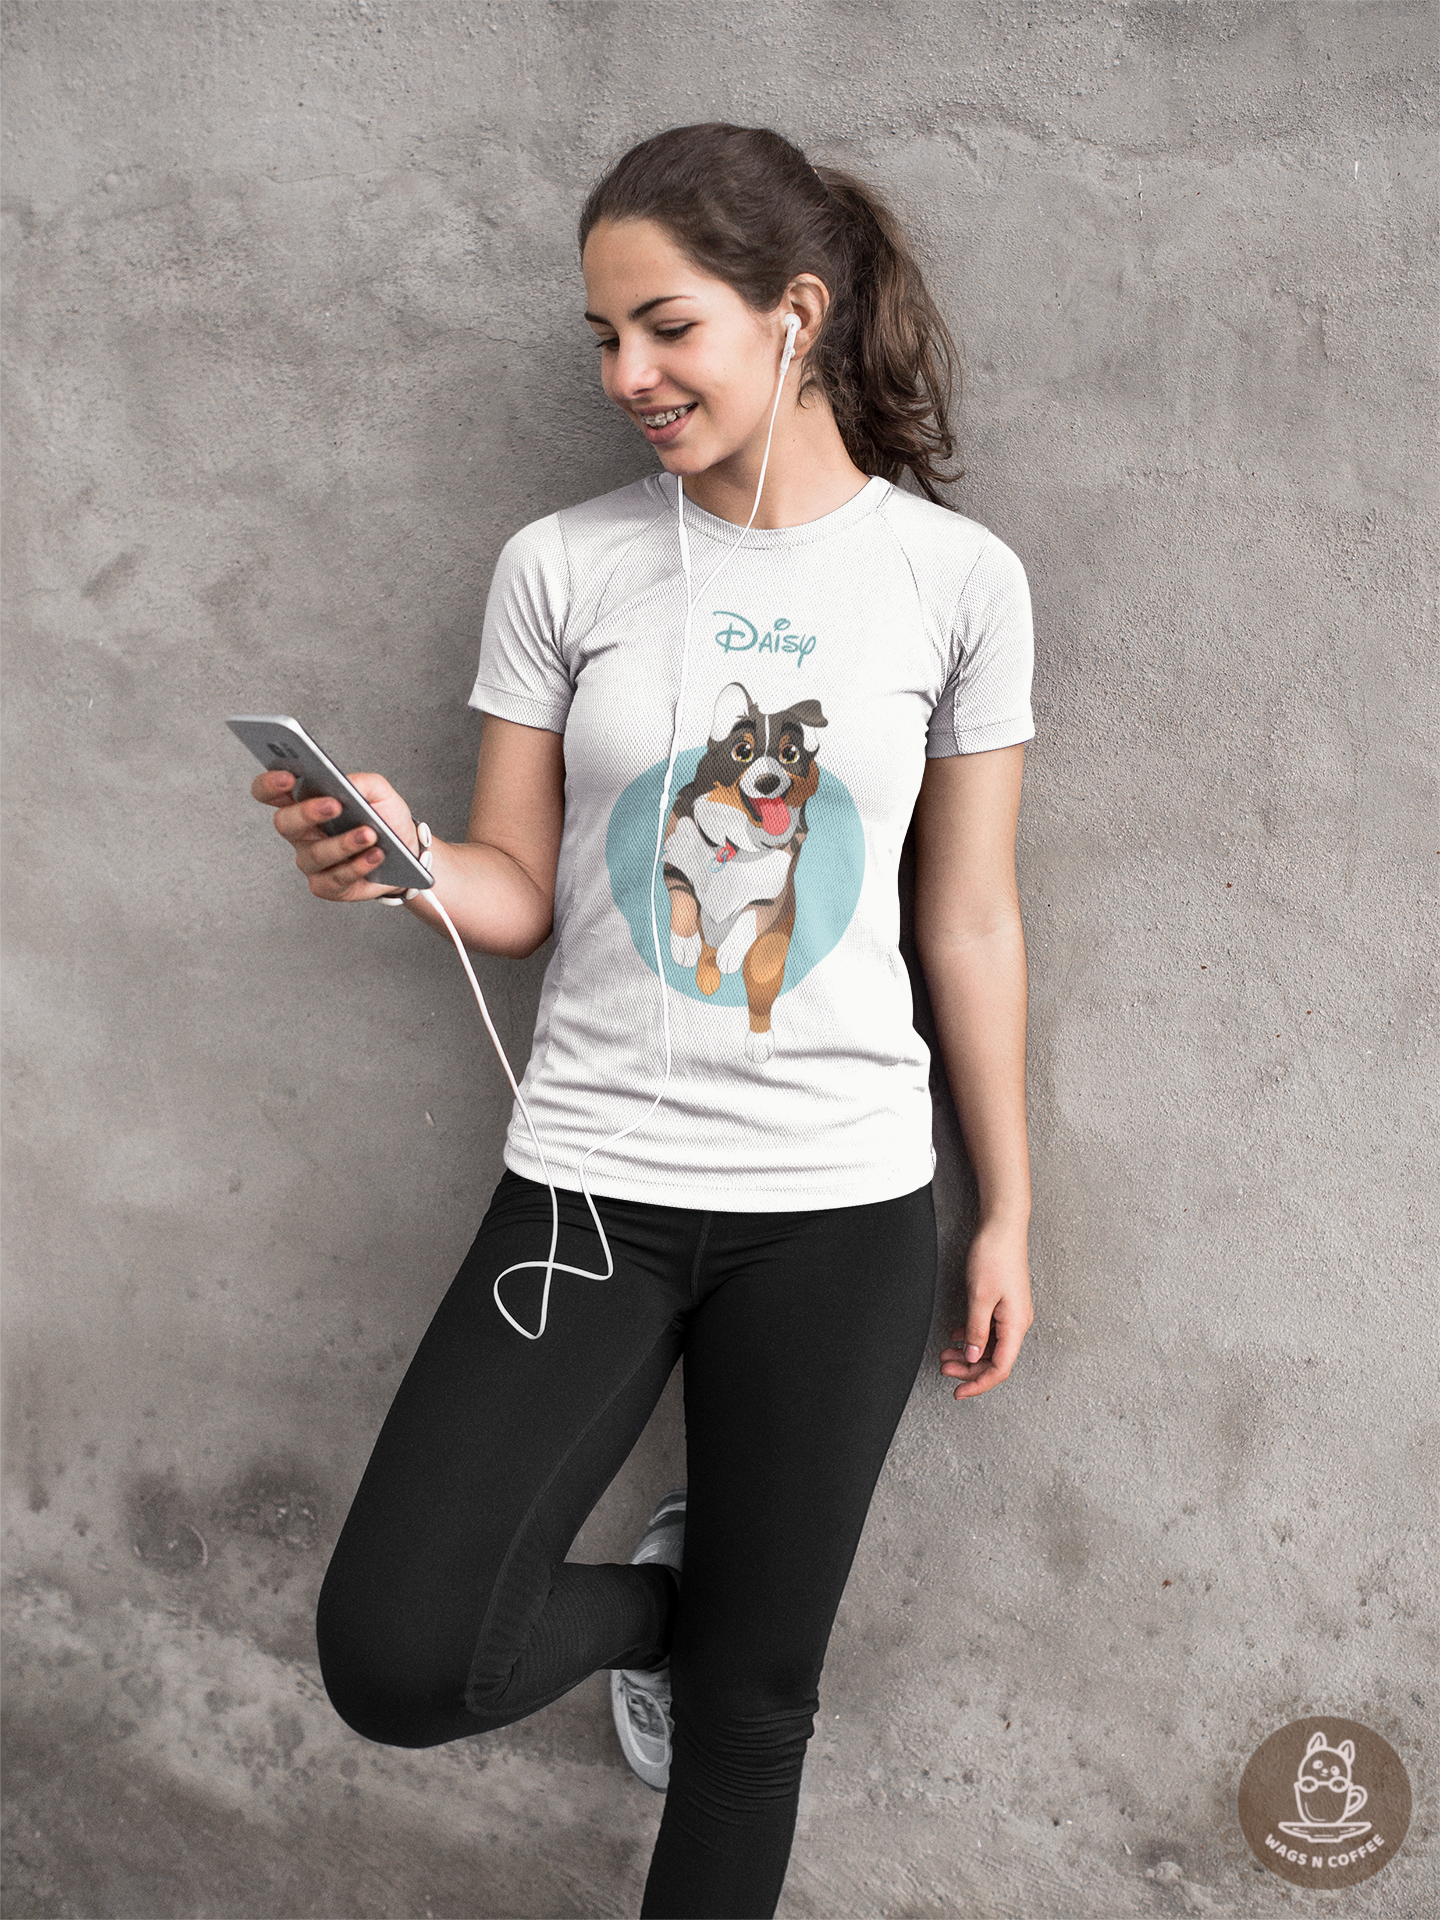 Unisex Custom Disney Style Pet T-shirt